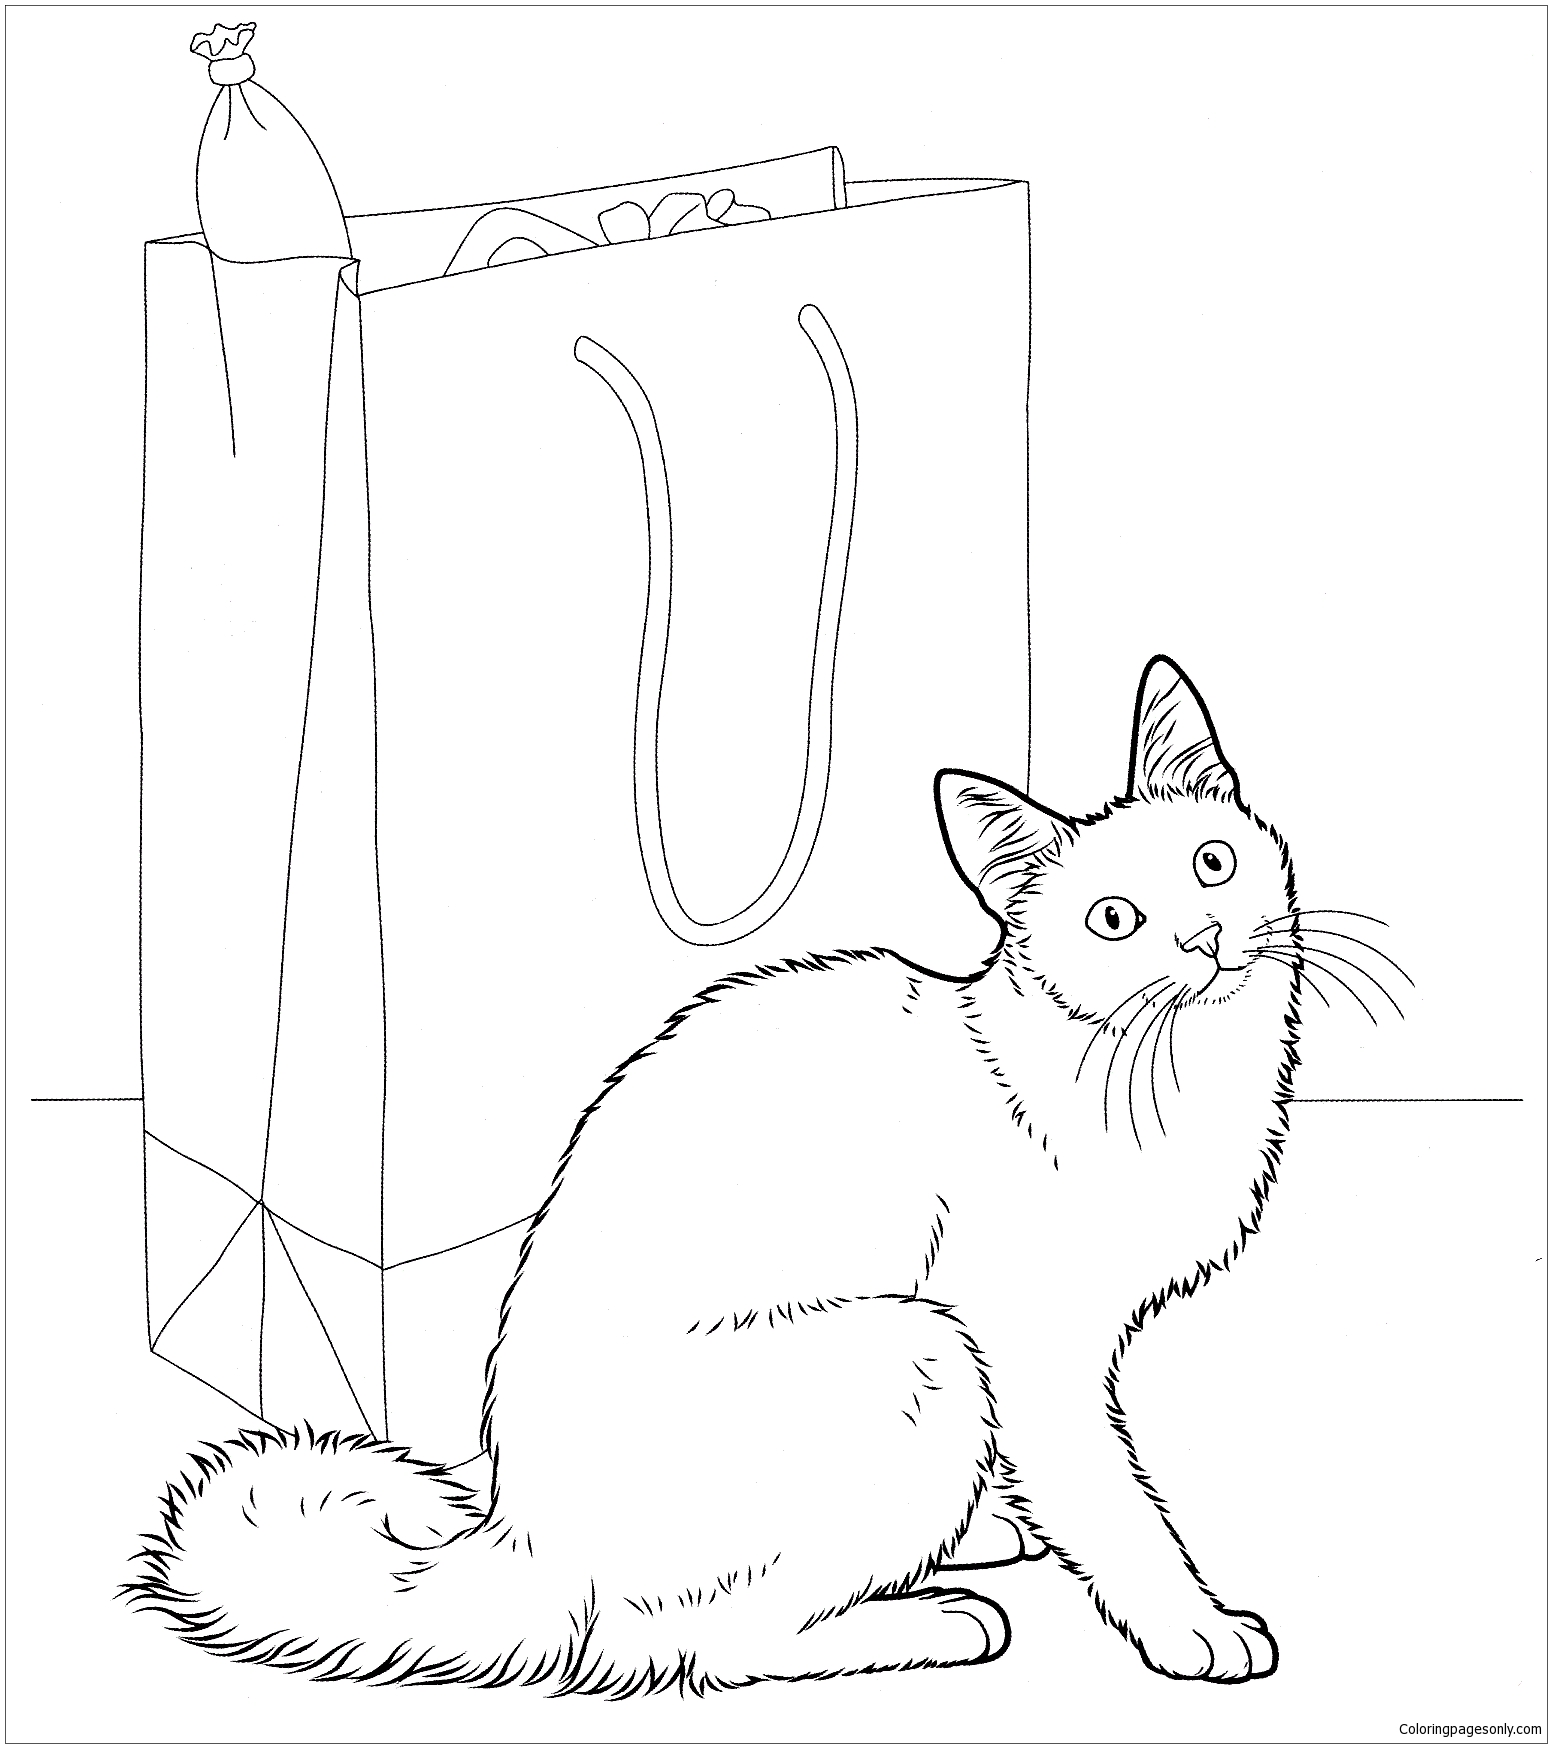 Angora Cat from Cat